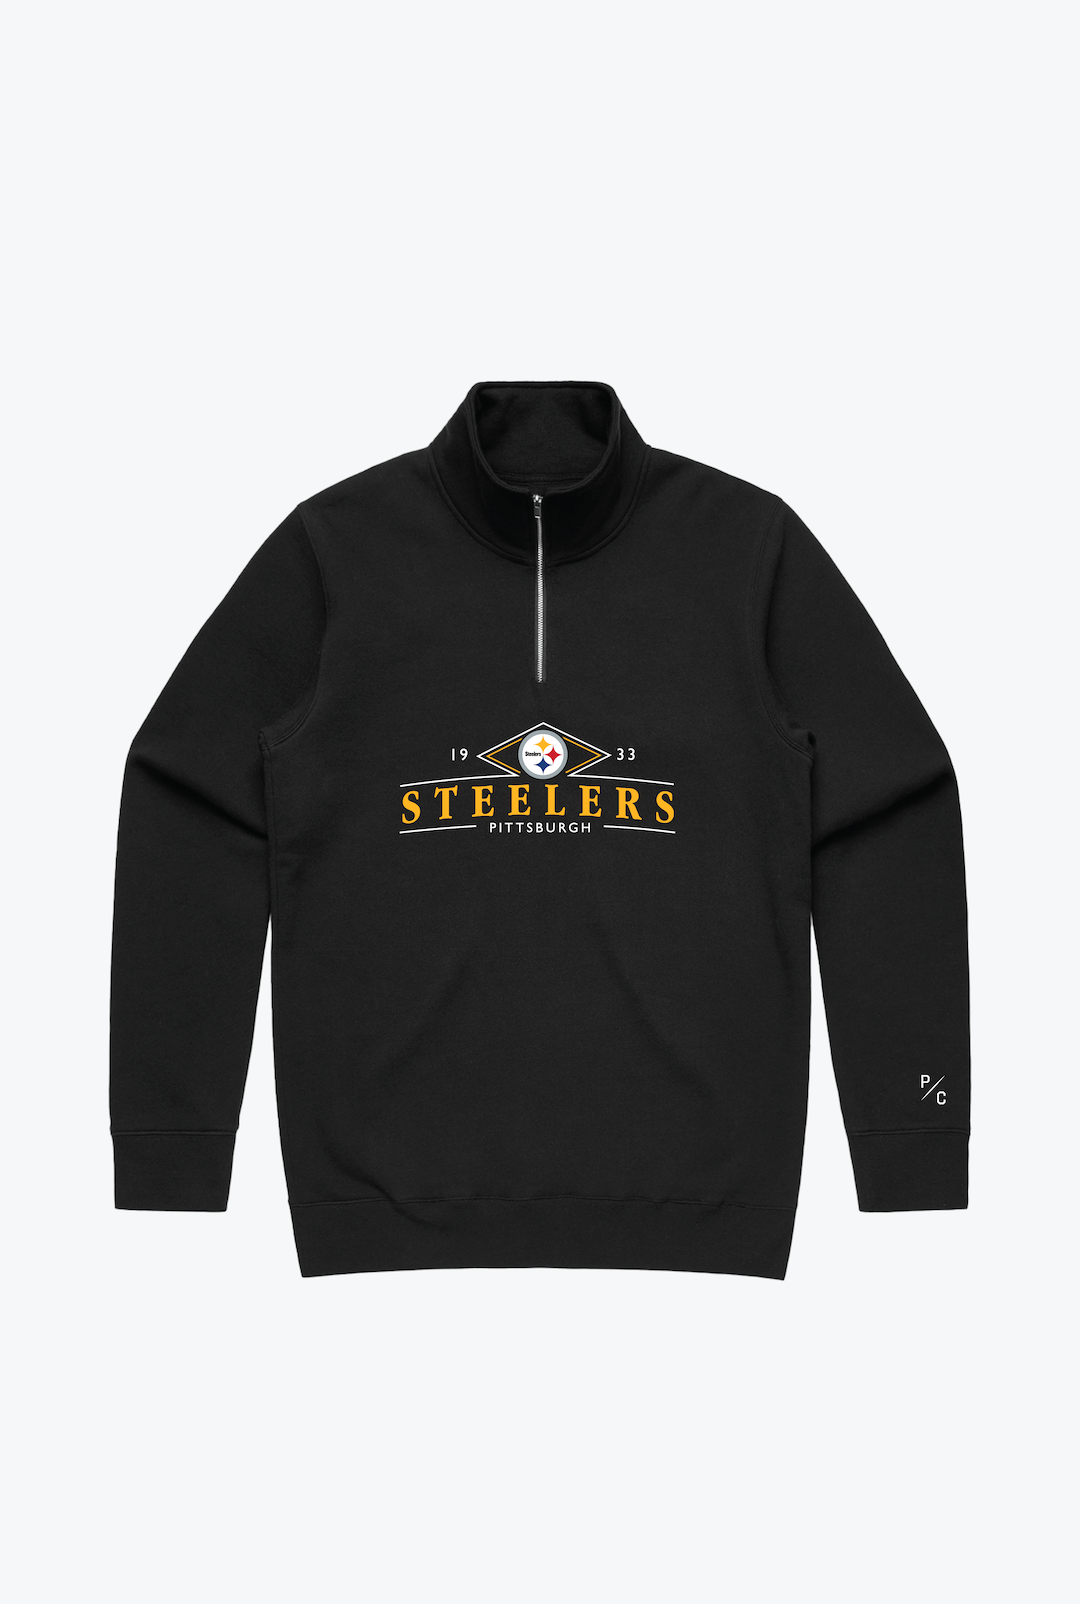 Pittsburgh Steelers Quarter Zip - Black